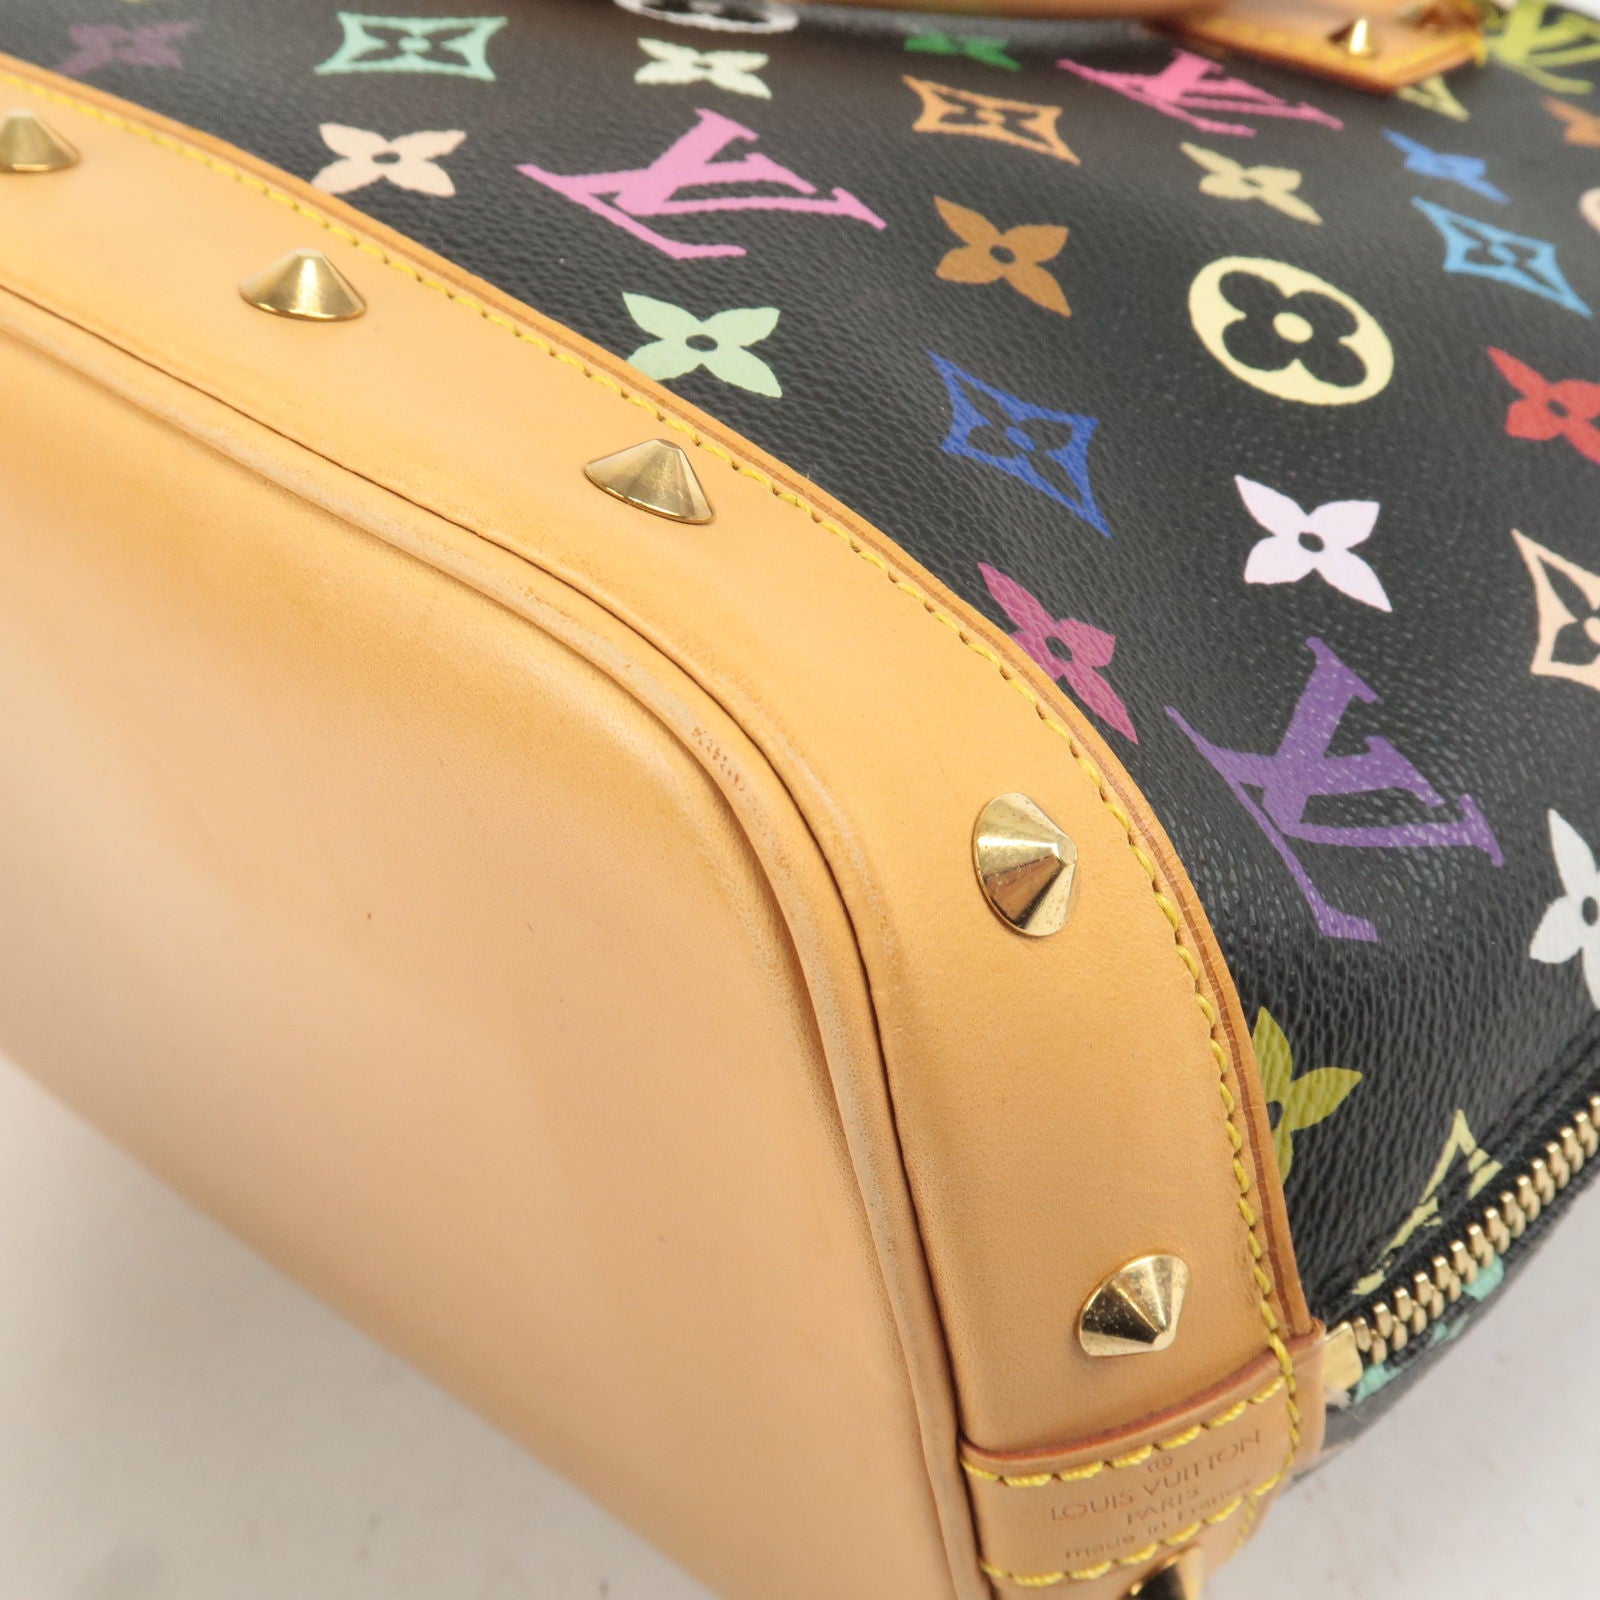 Louis Vuitton Hampstead Bag: The Mini Travel Accessory